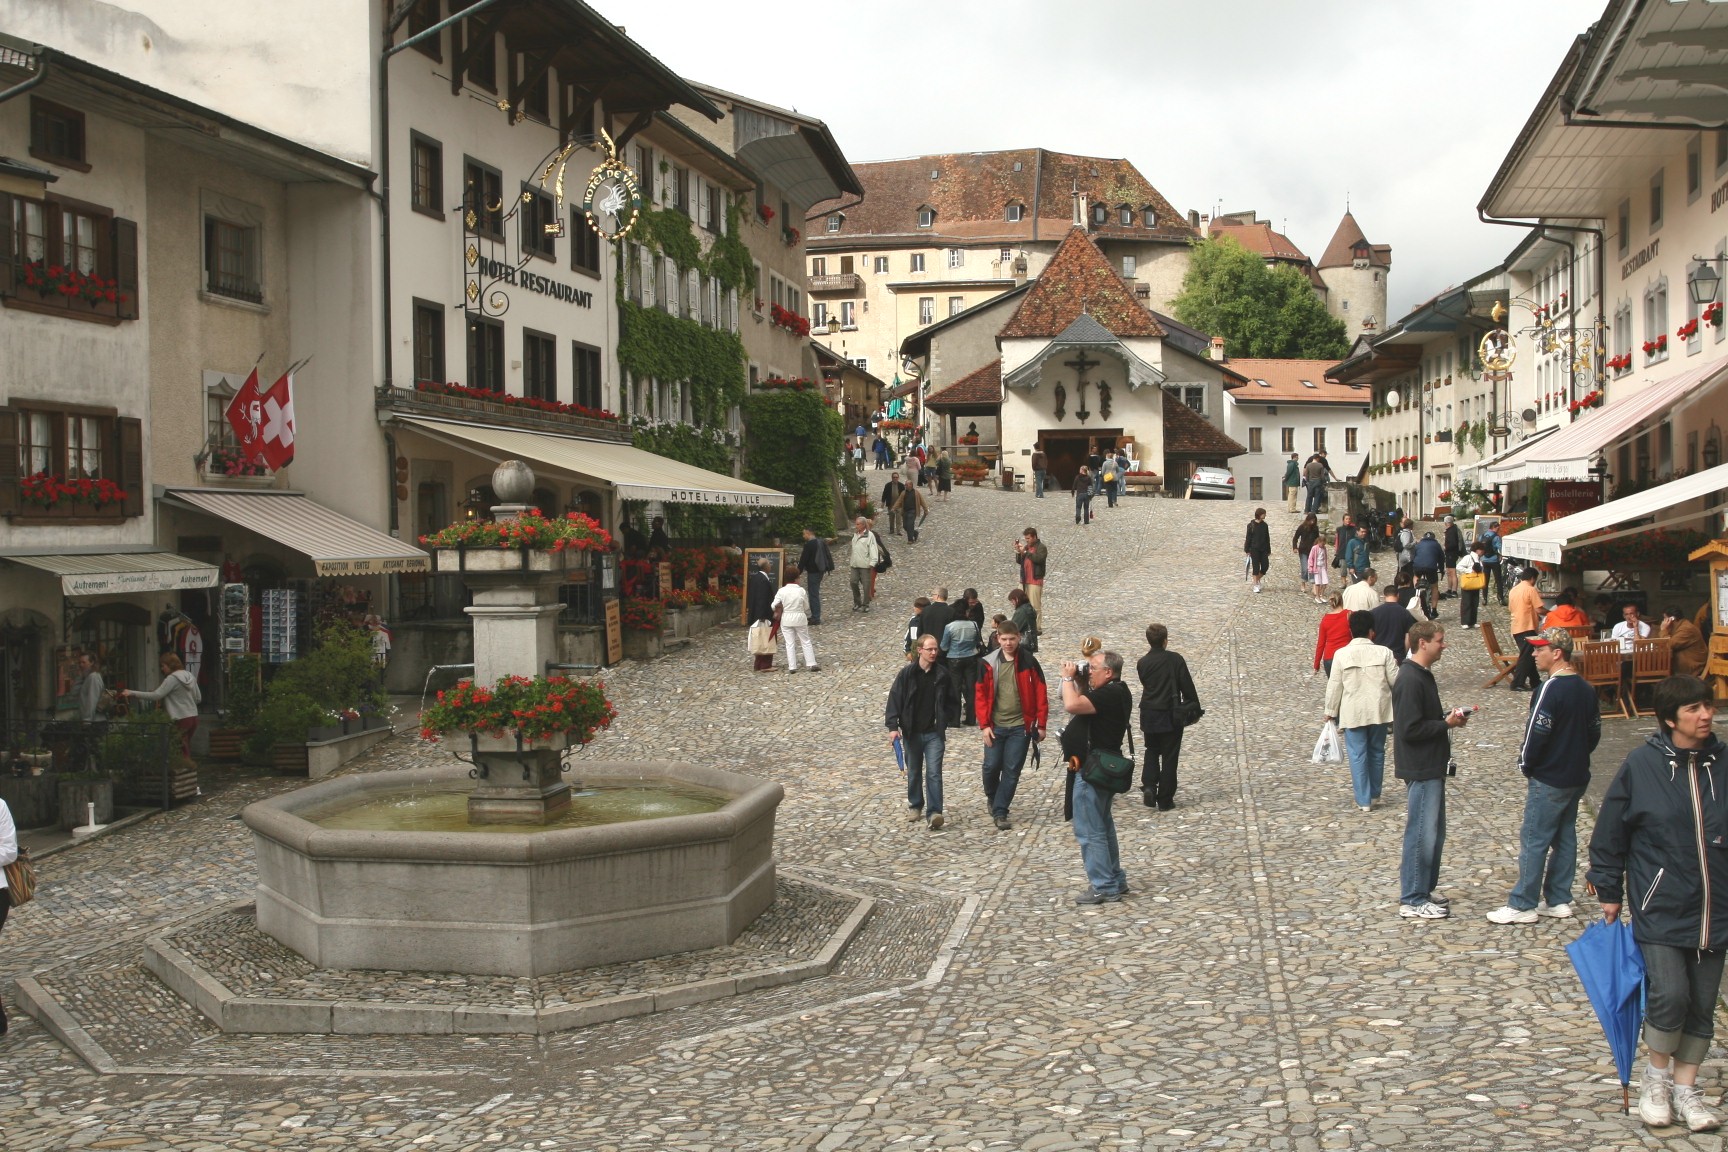 File:Gruyères.Fribourg.Switzerland.Main street.jpg - Wikipedia